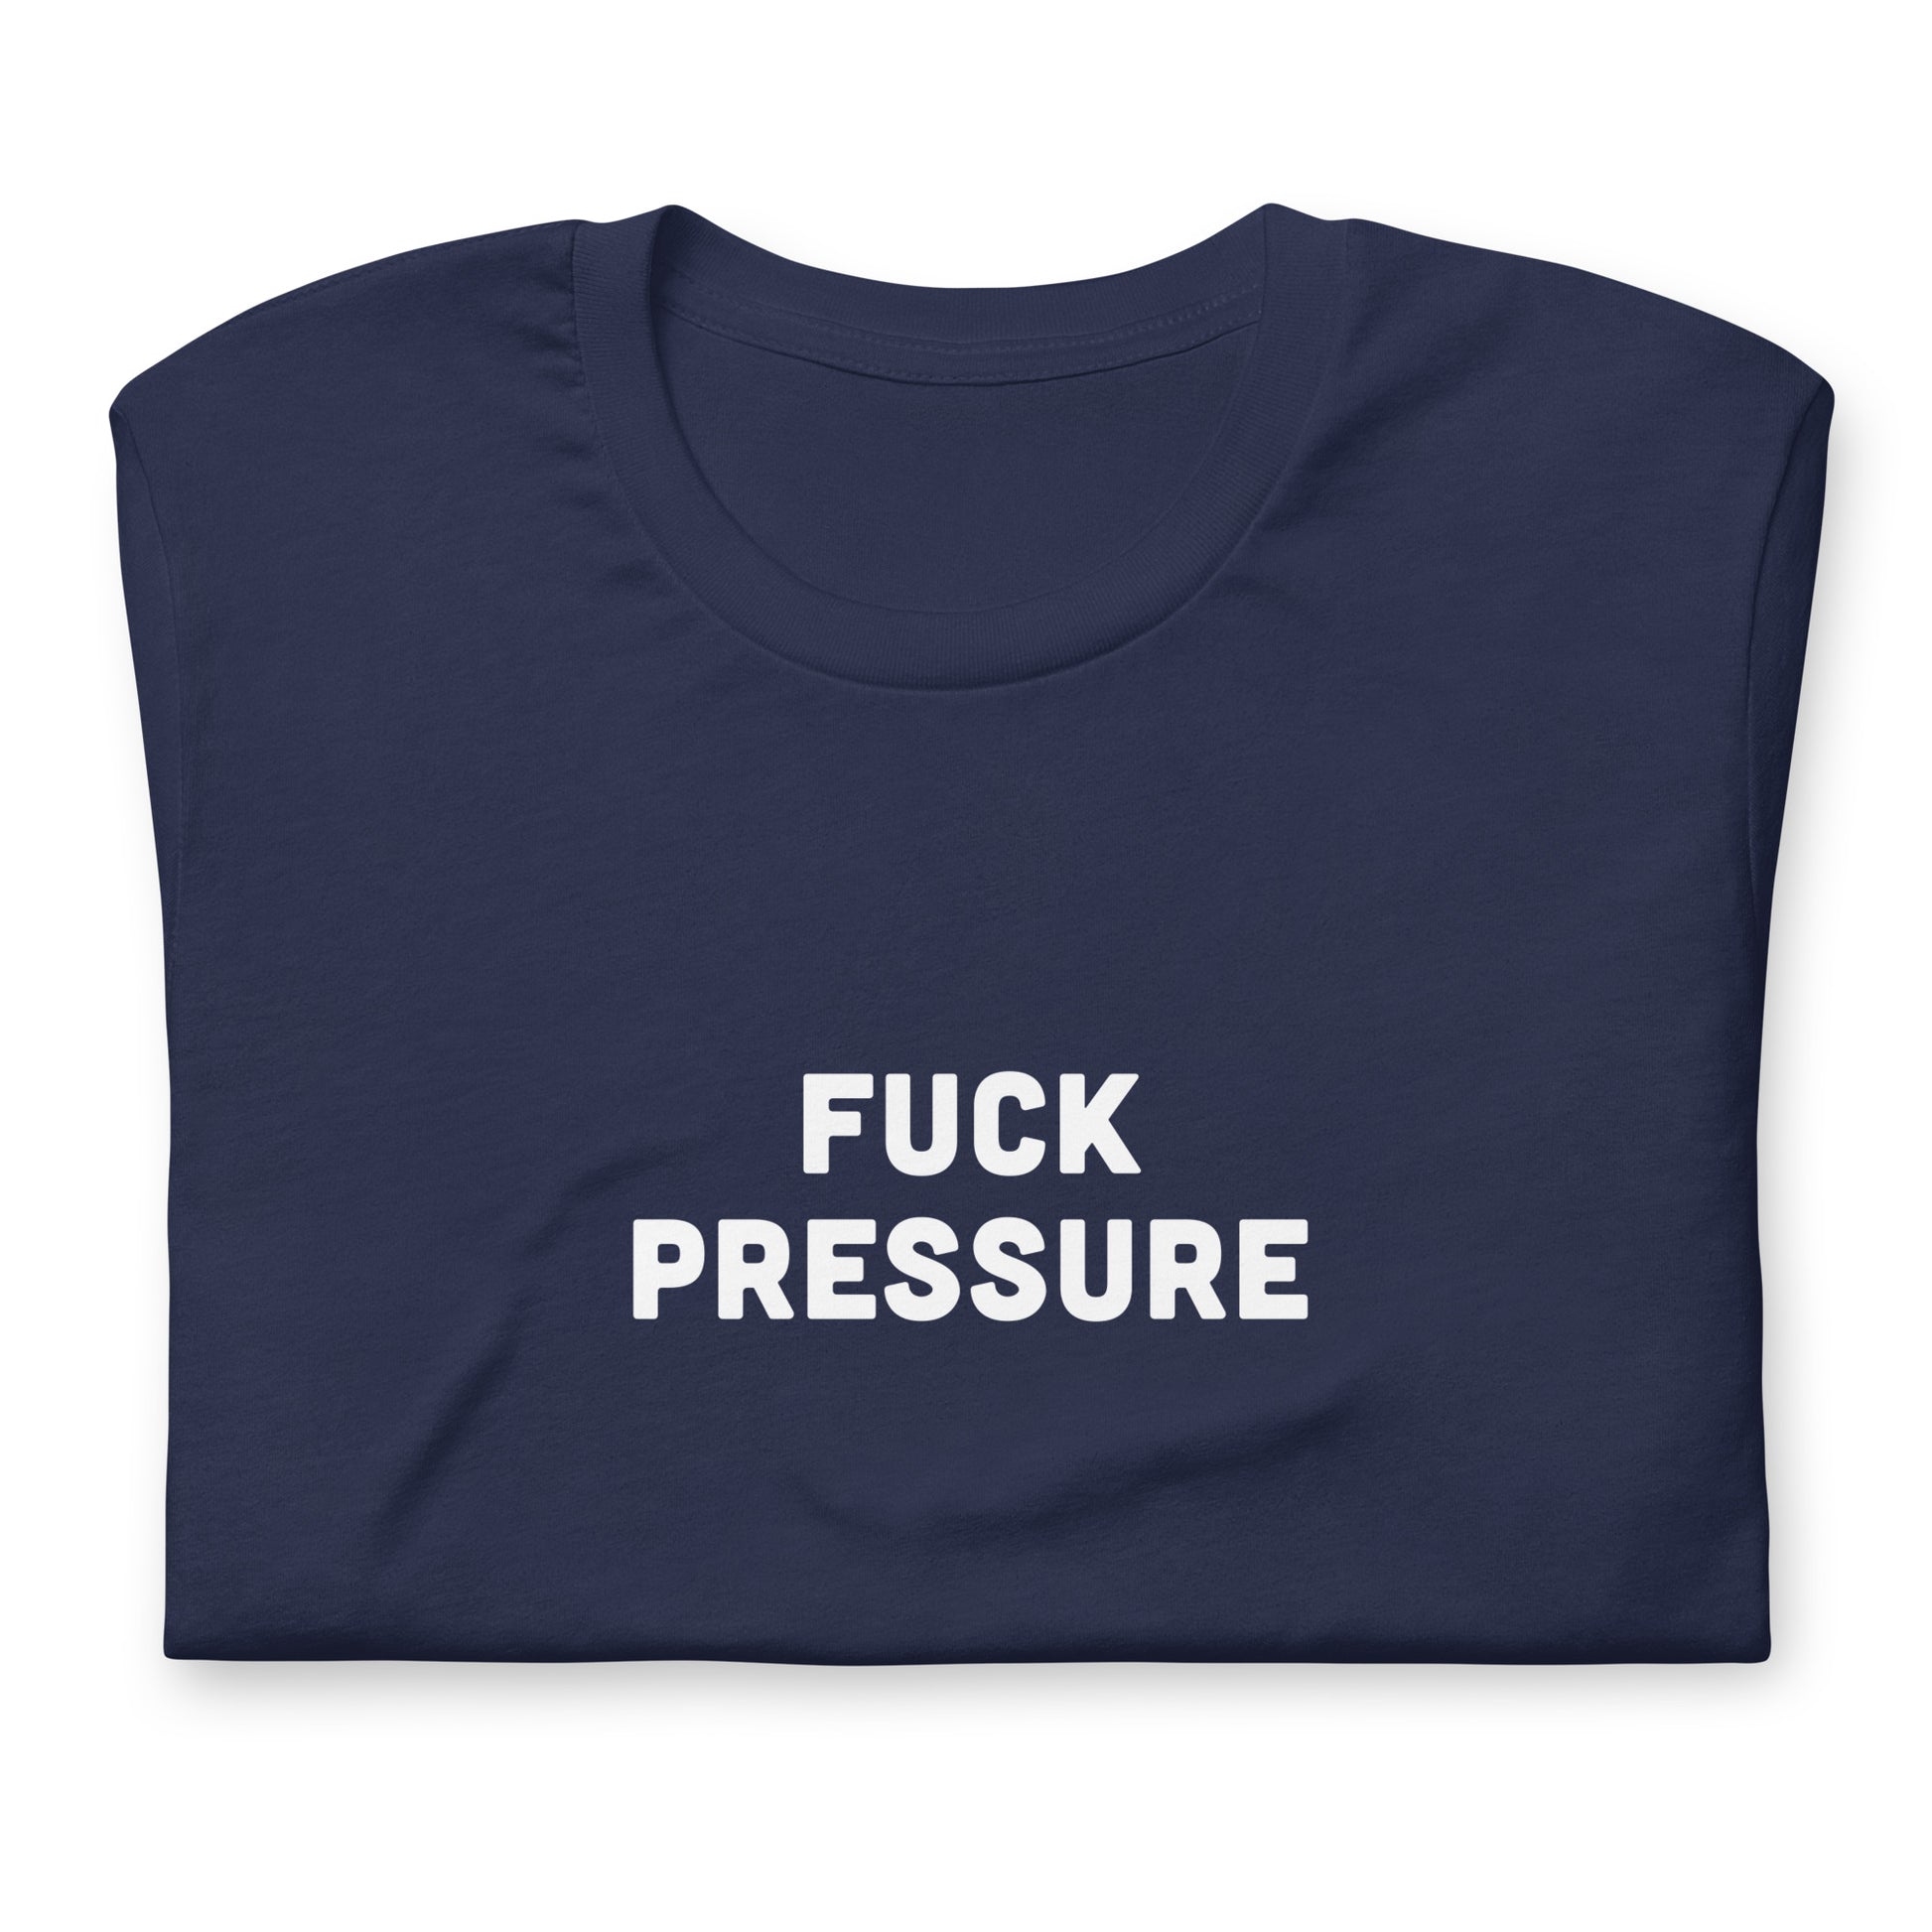 Fuck Pressure T-Shirt Size L Color Black